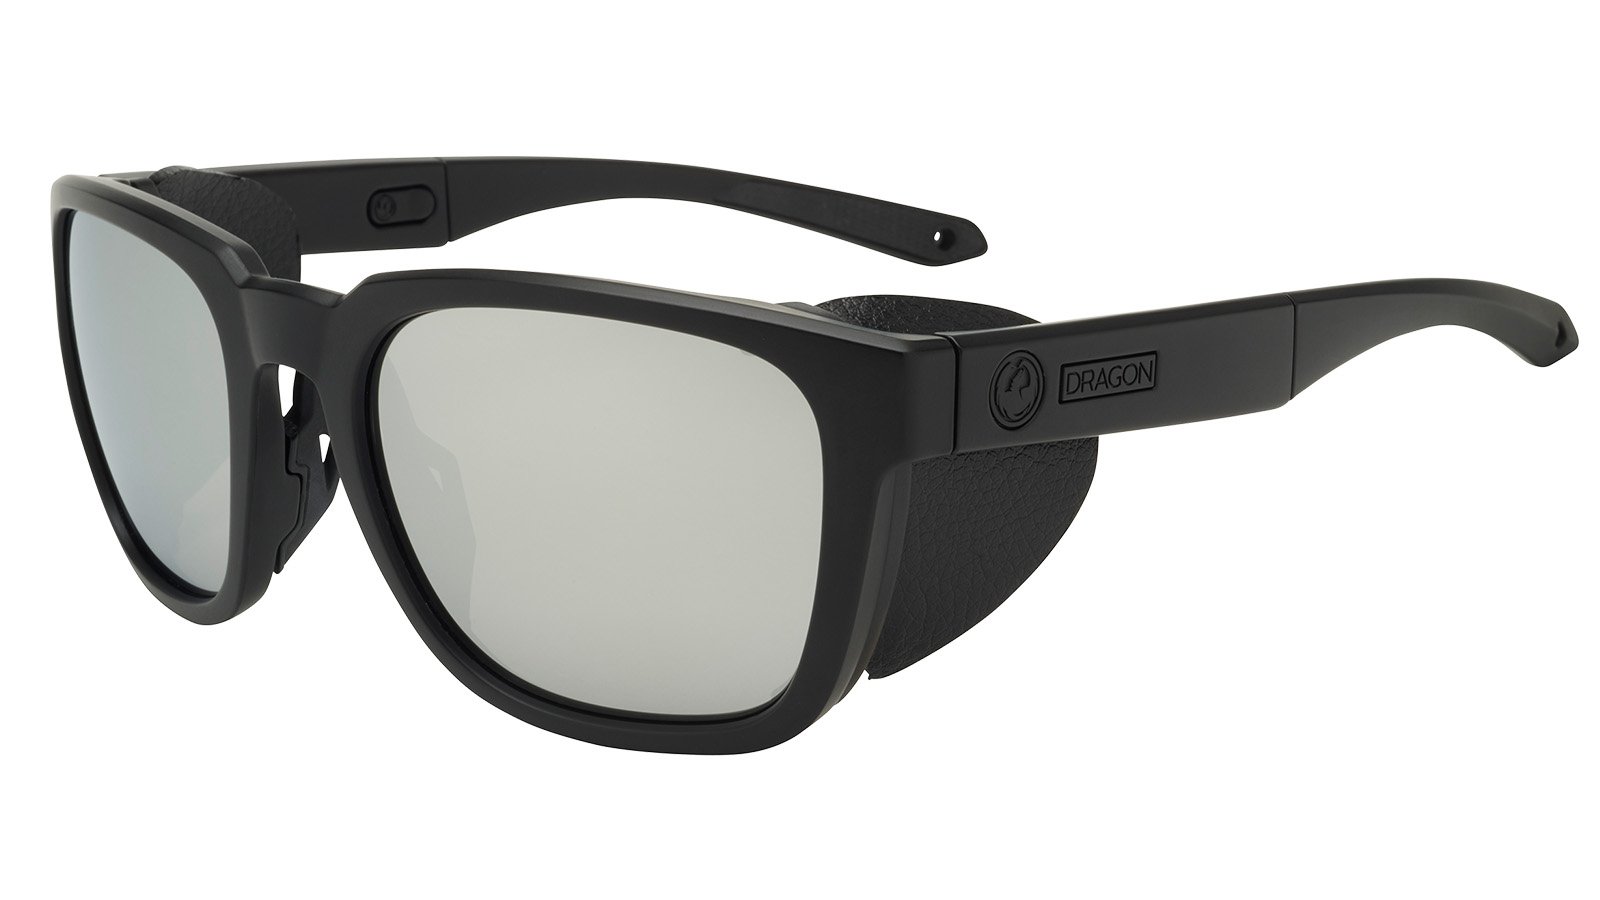 Dragon SS20 Sunglasses